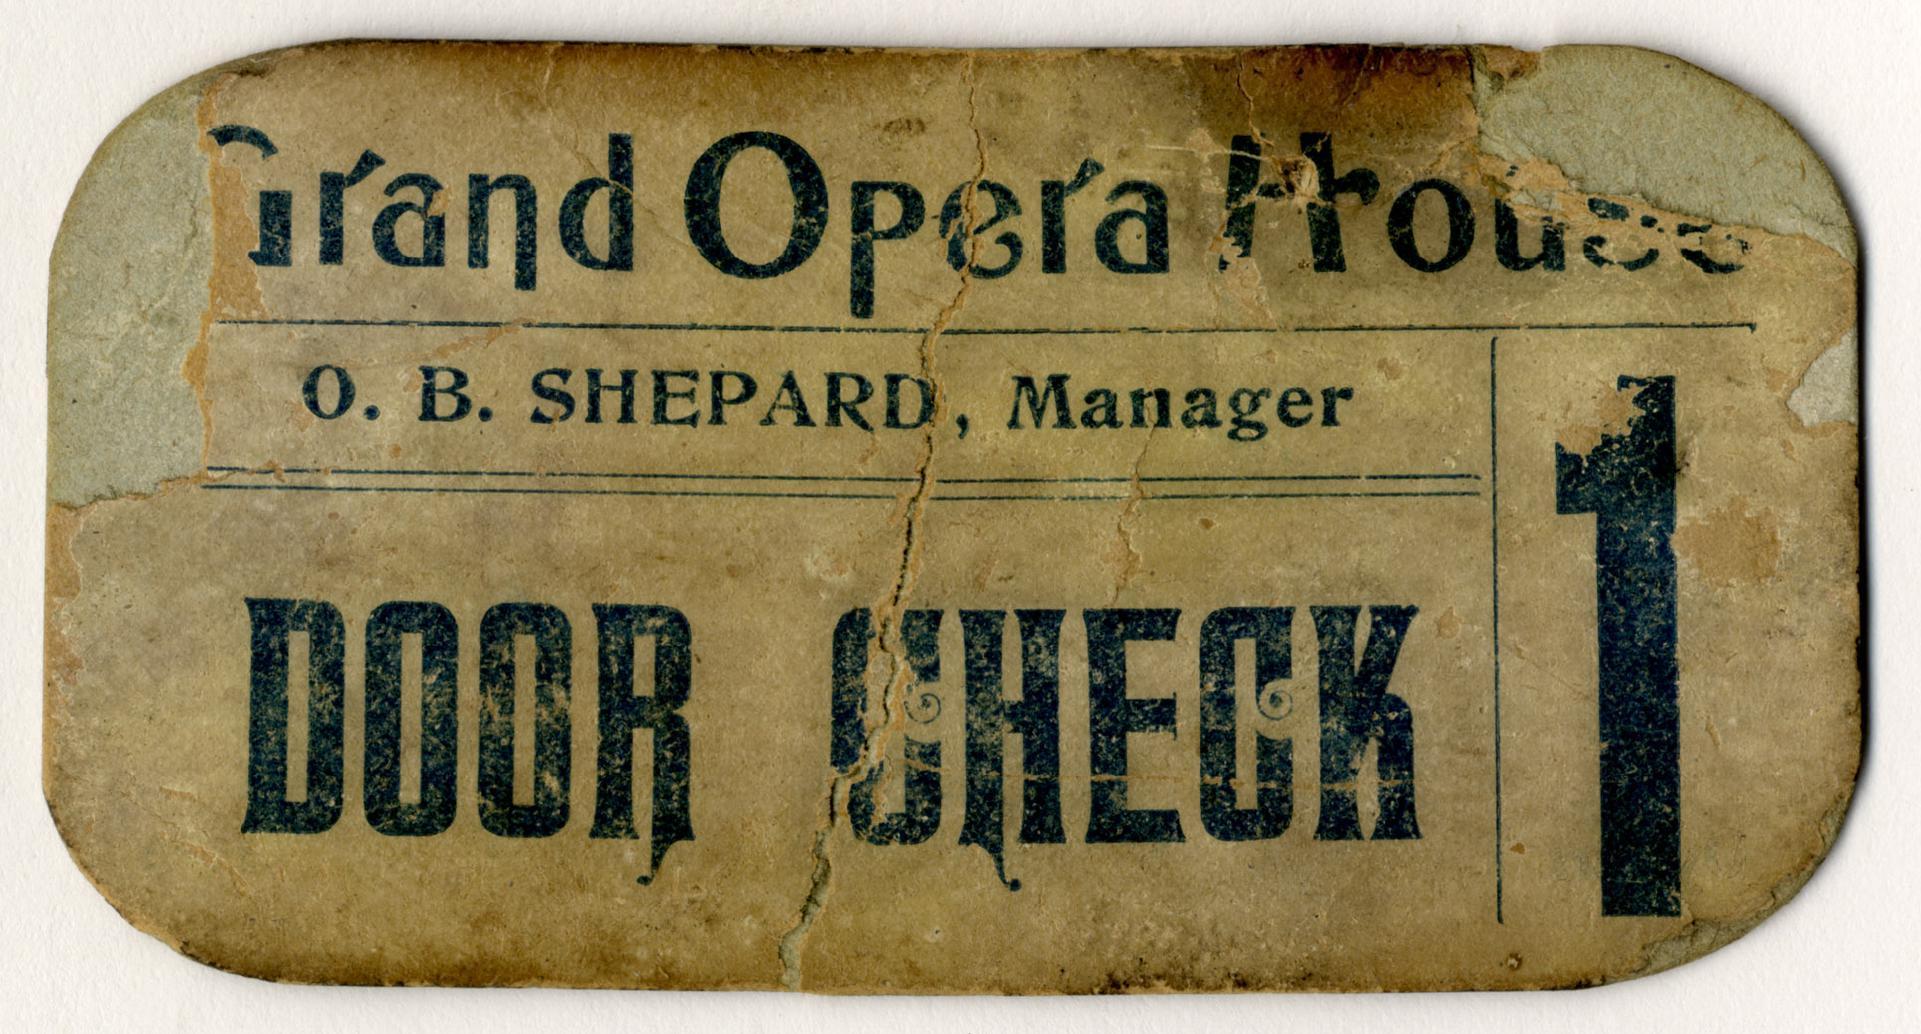 [G]rand Opera Ho[use] : O.B. Shepard, Manager : door check 1